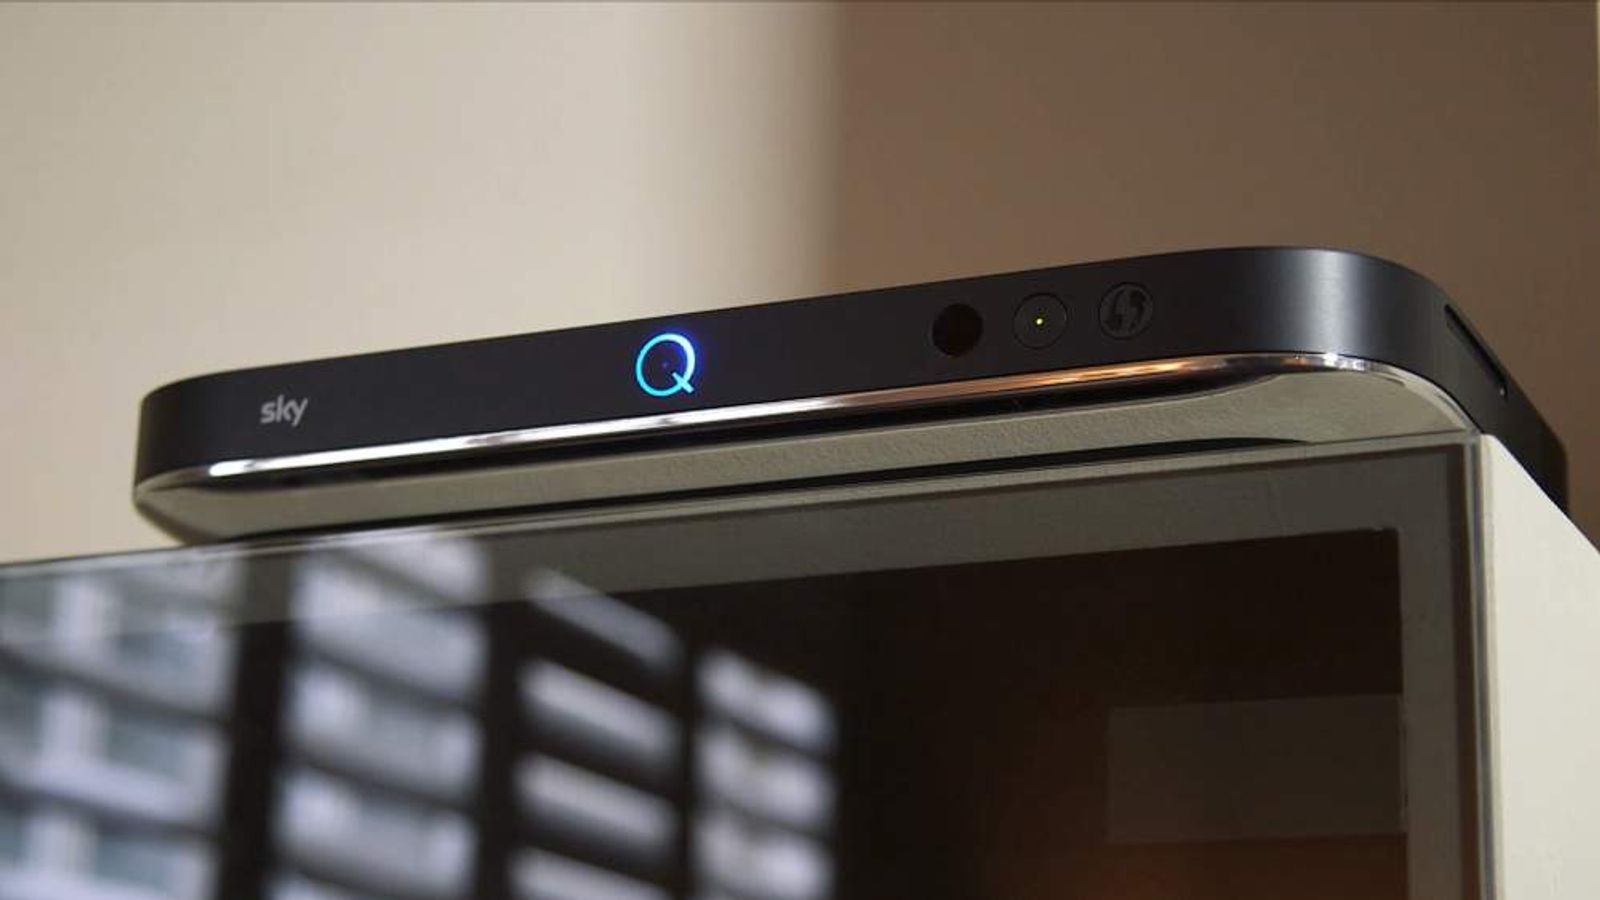 New Sky Q Box Allows 'Fluid TV Viewing' | Science & Tech News | Sky News